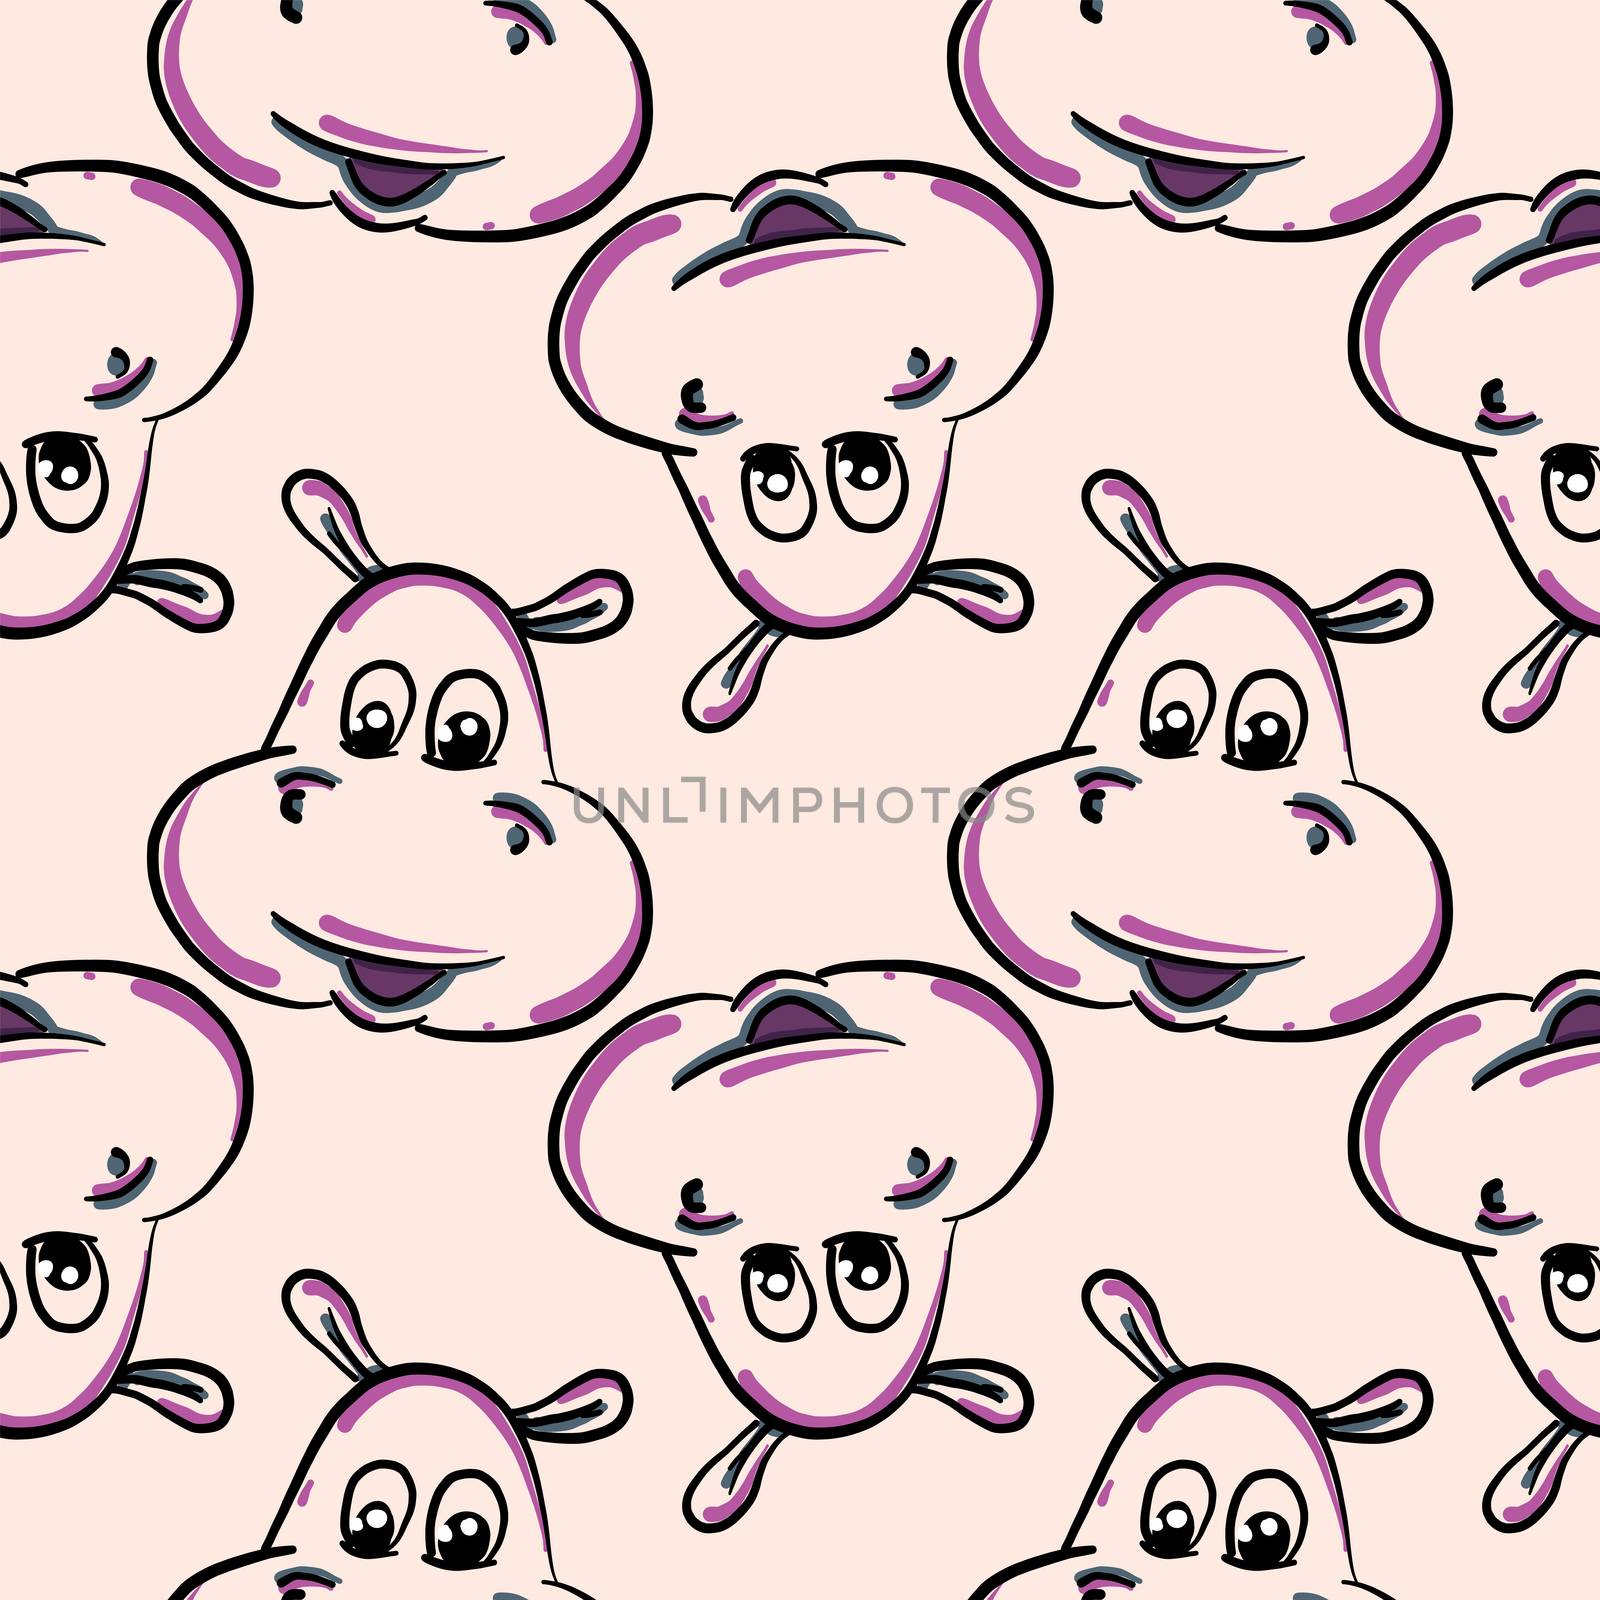 Hippo pattern , illustration, vector on white background